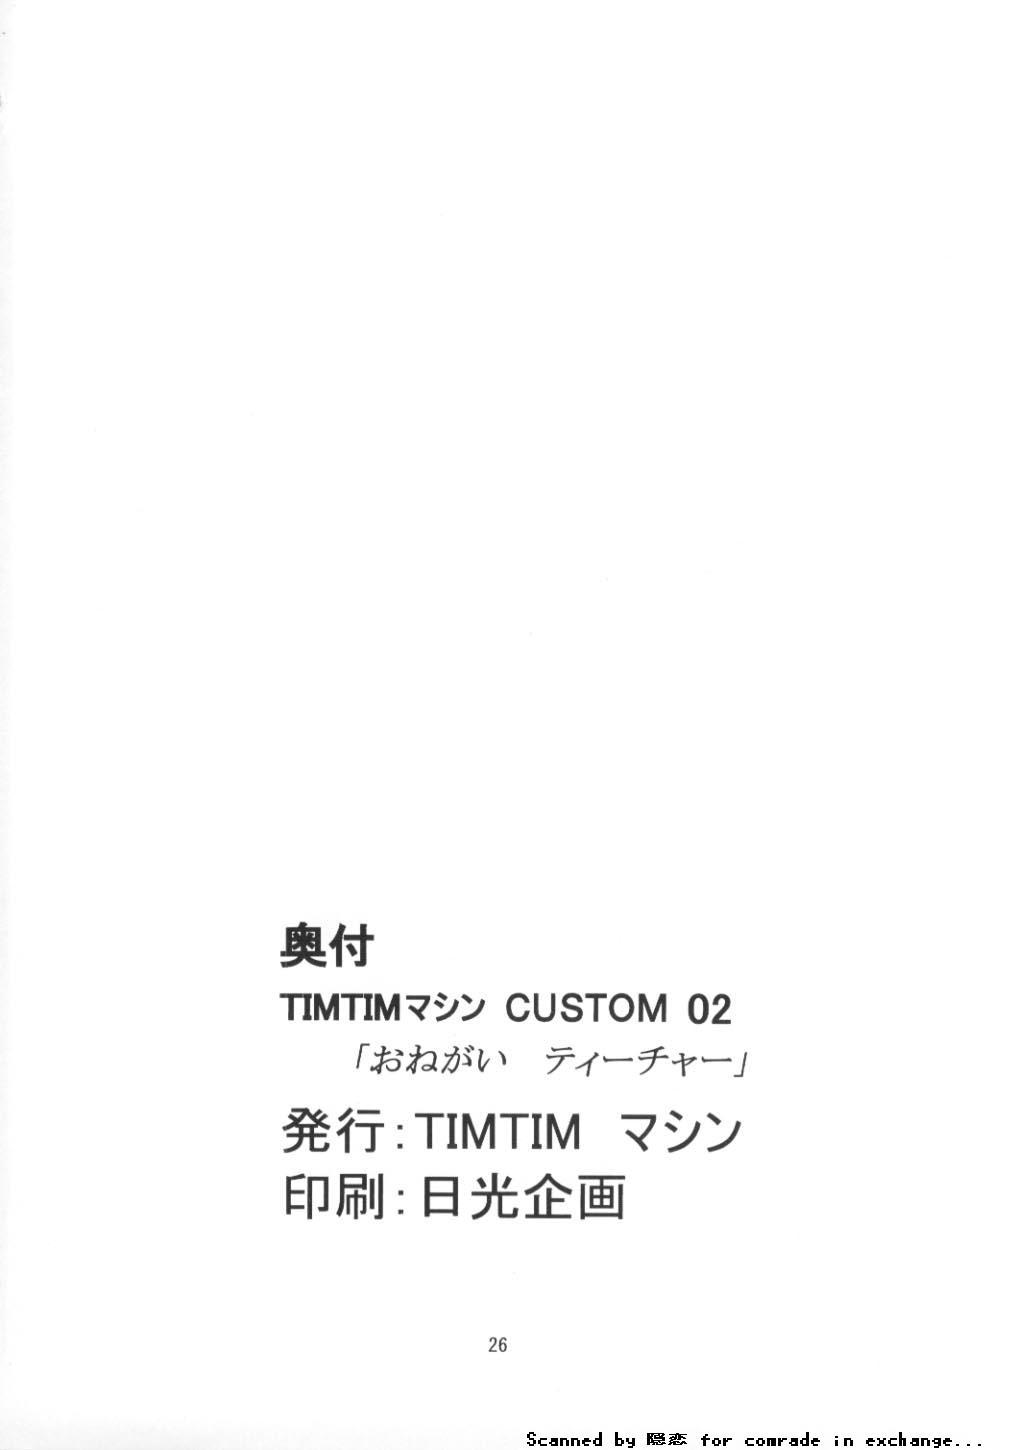 TIMTIM MACHINE CUSTOM 02 Sumer Special 2002 24